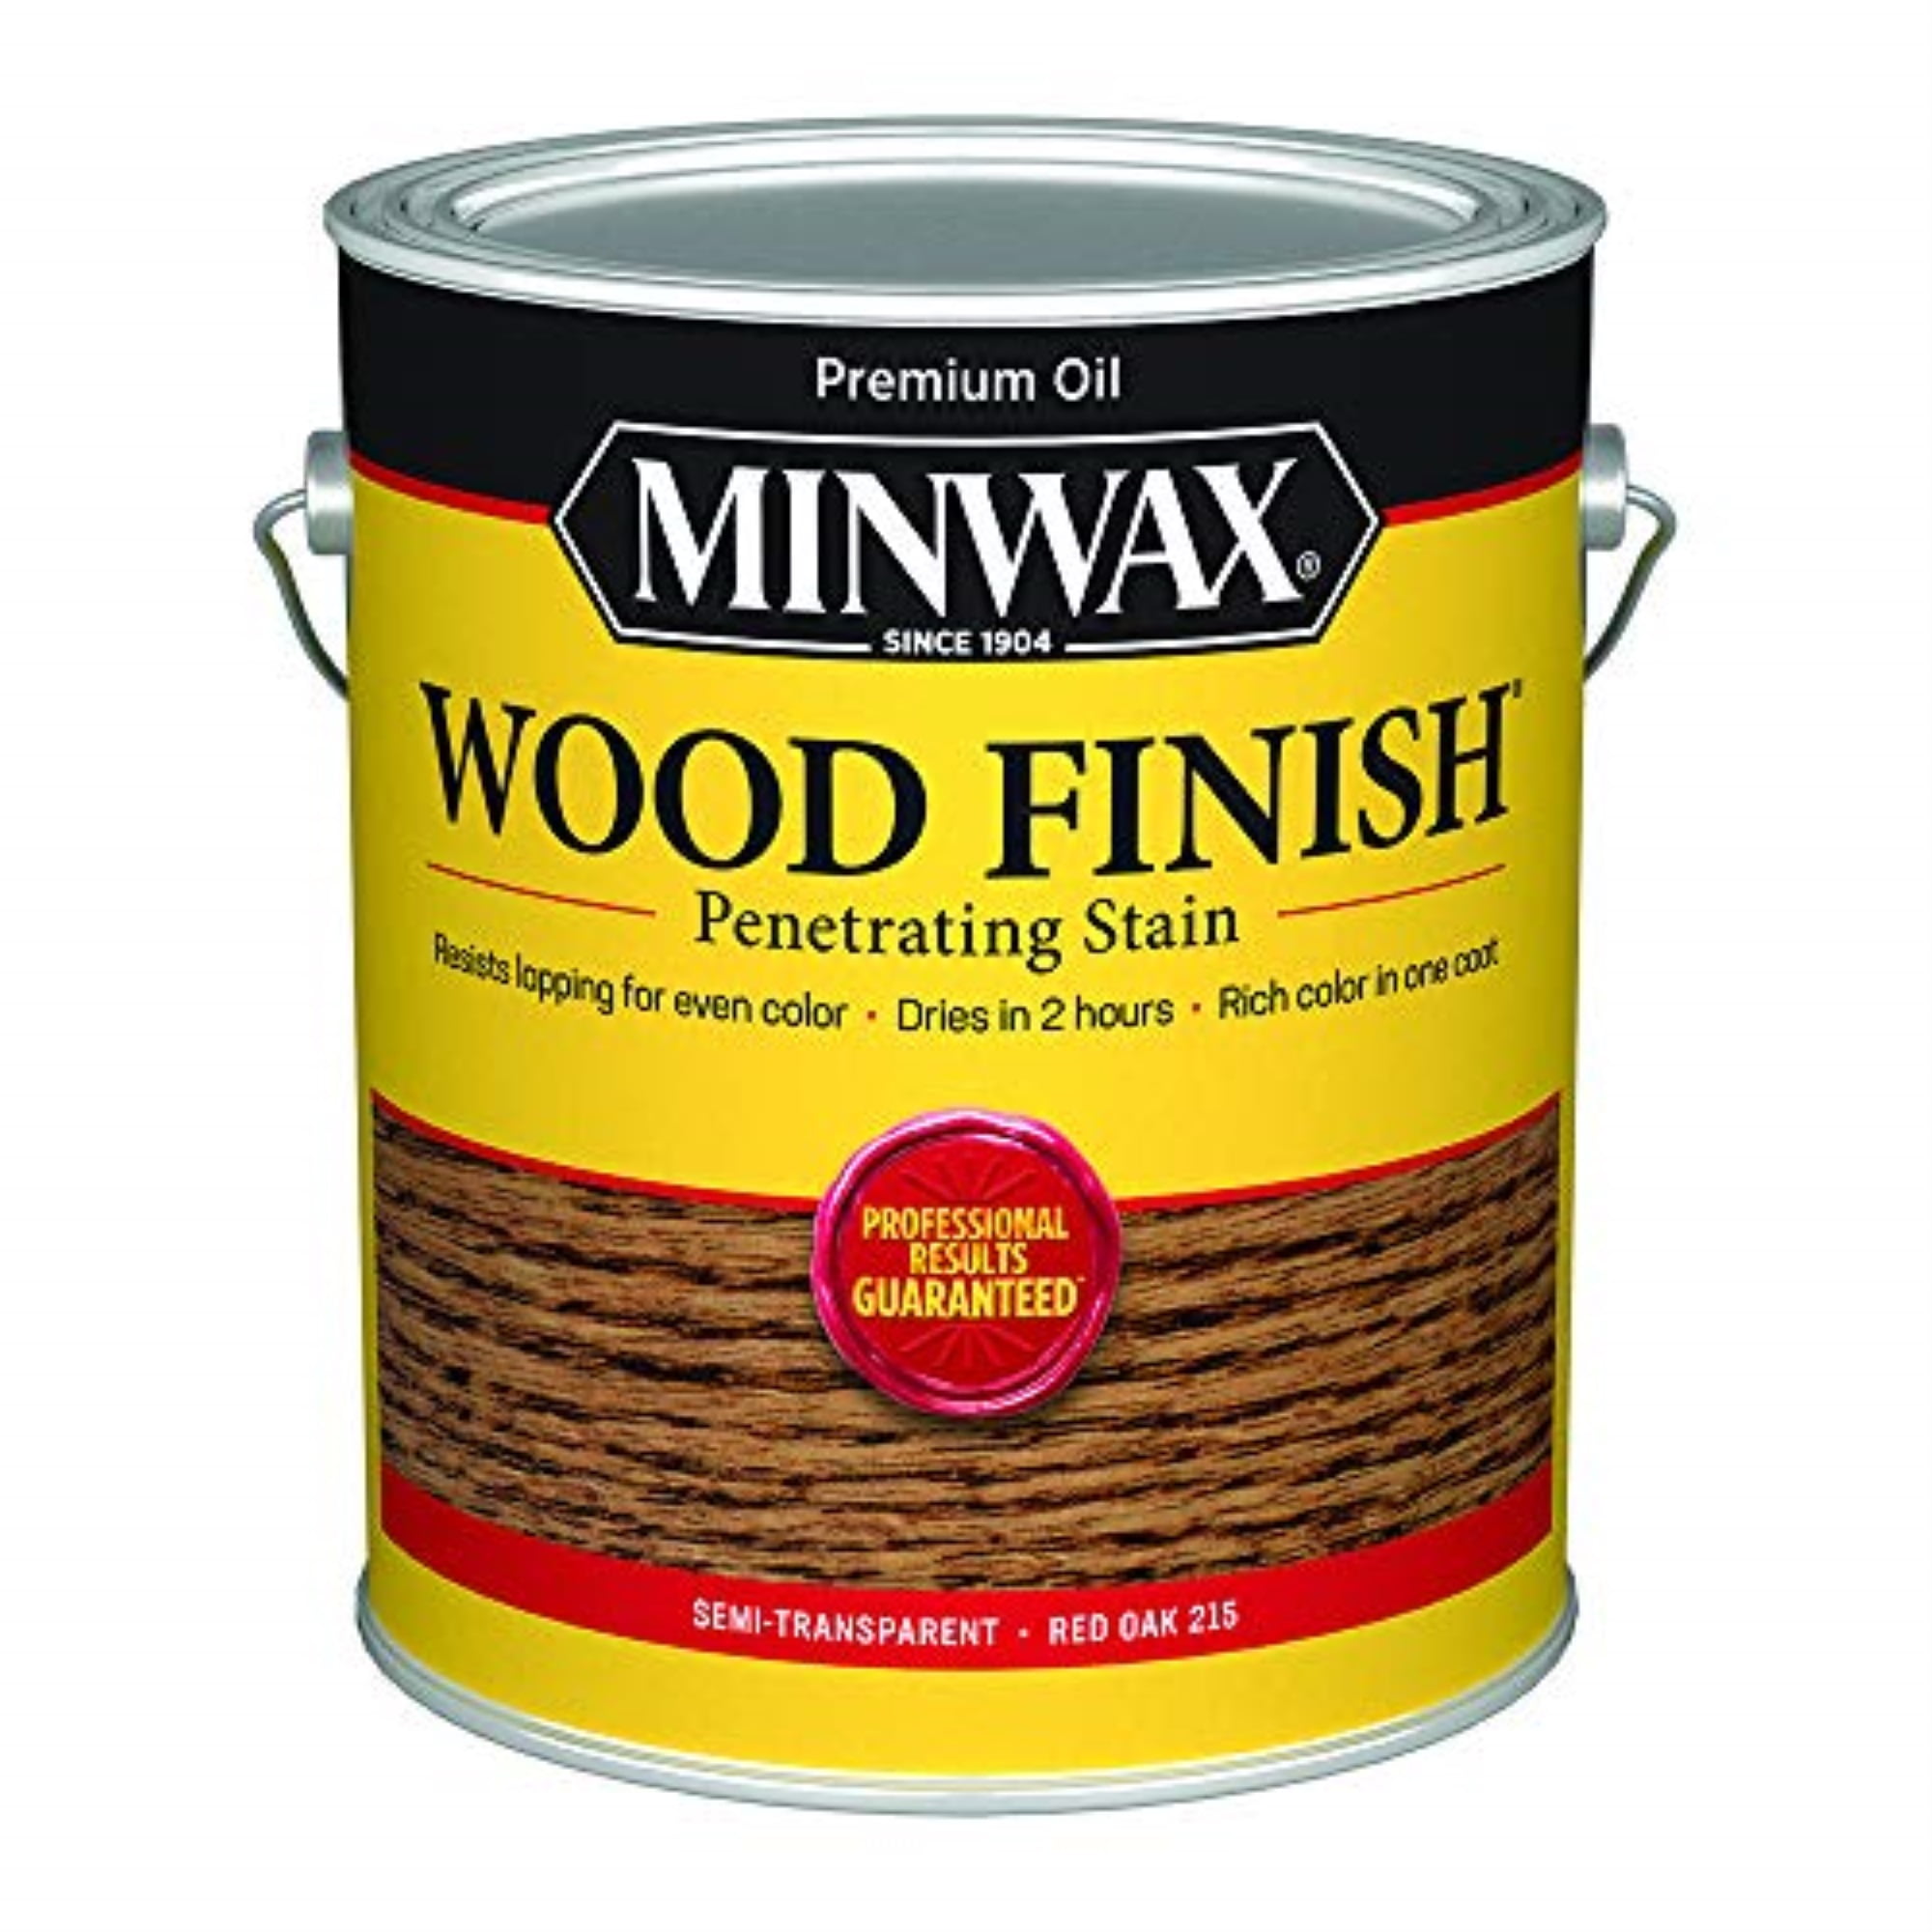 sawdust  ~  15 ounces  ~  For Smoking Wood Chips shavings Bulk Lot! Red Oak 